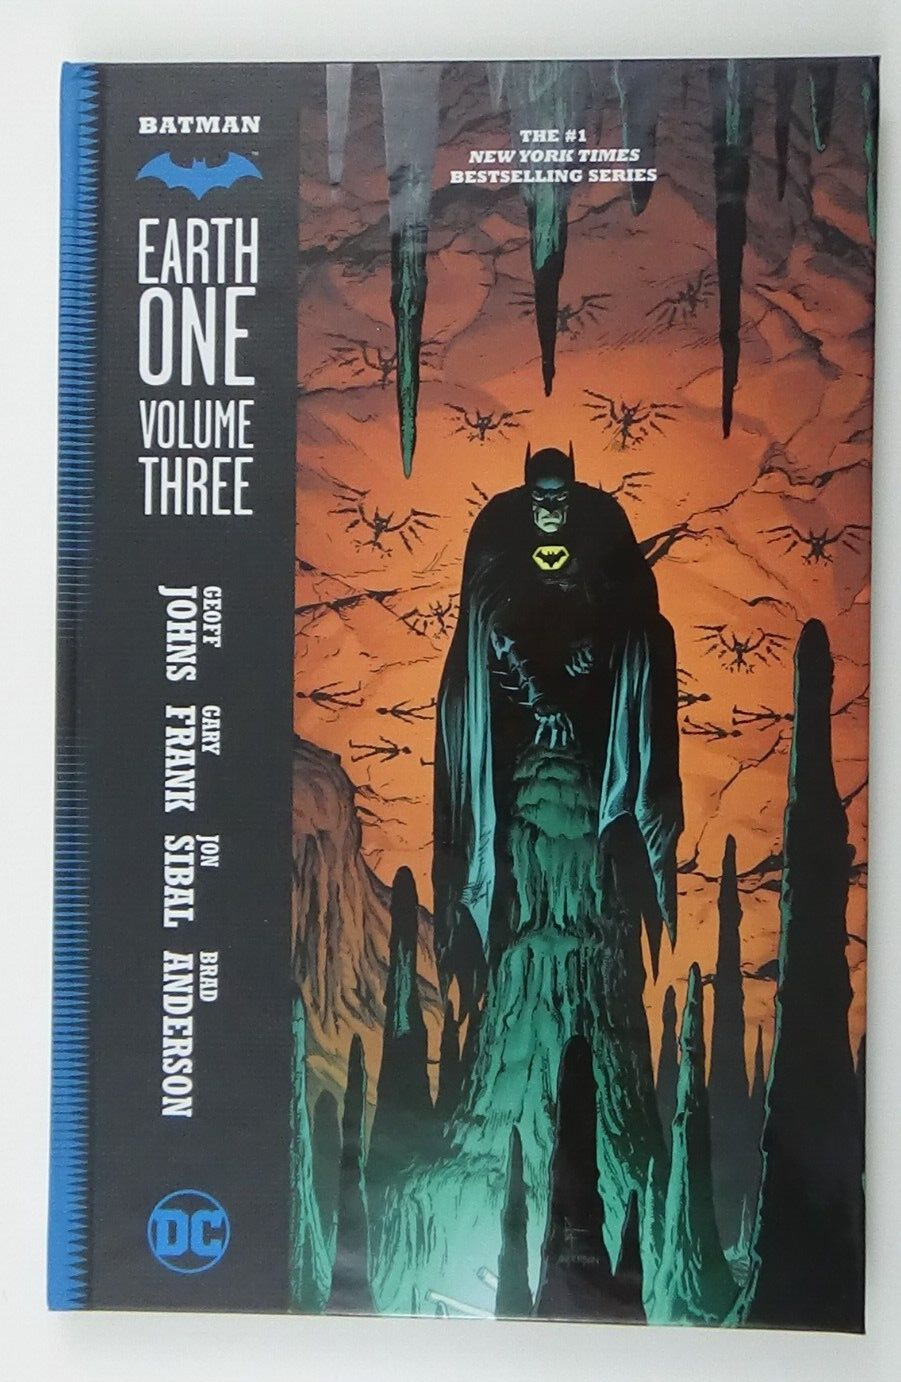 Batman: Earth One Volume #3 (DC Comics, August 2021) #018